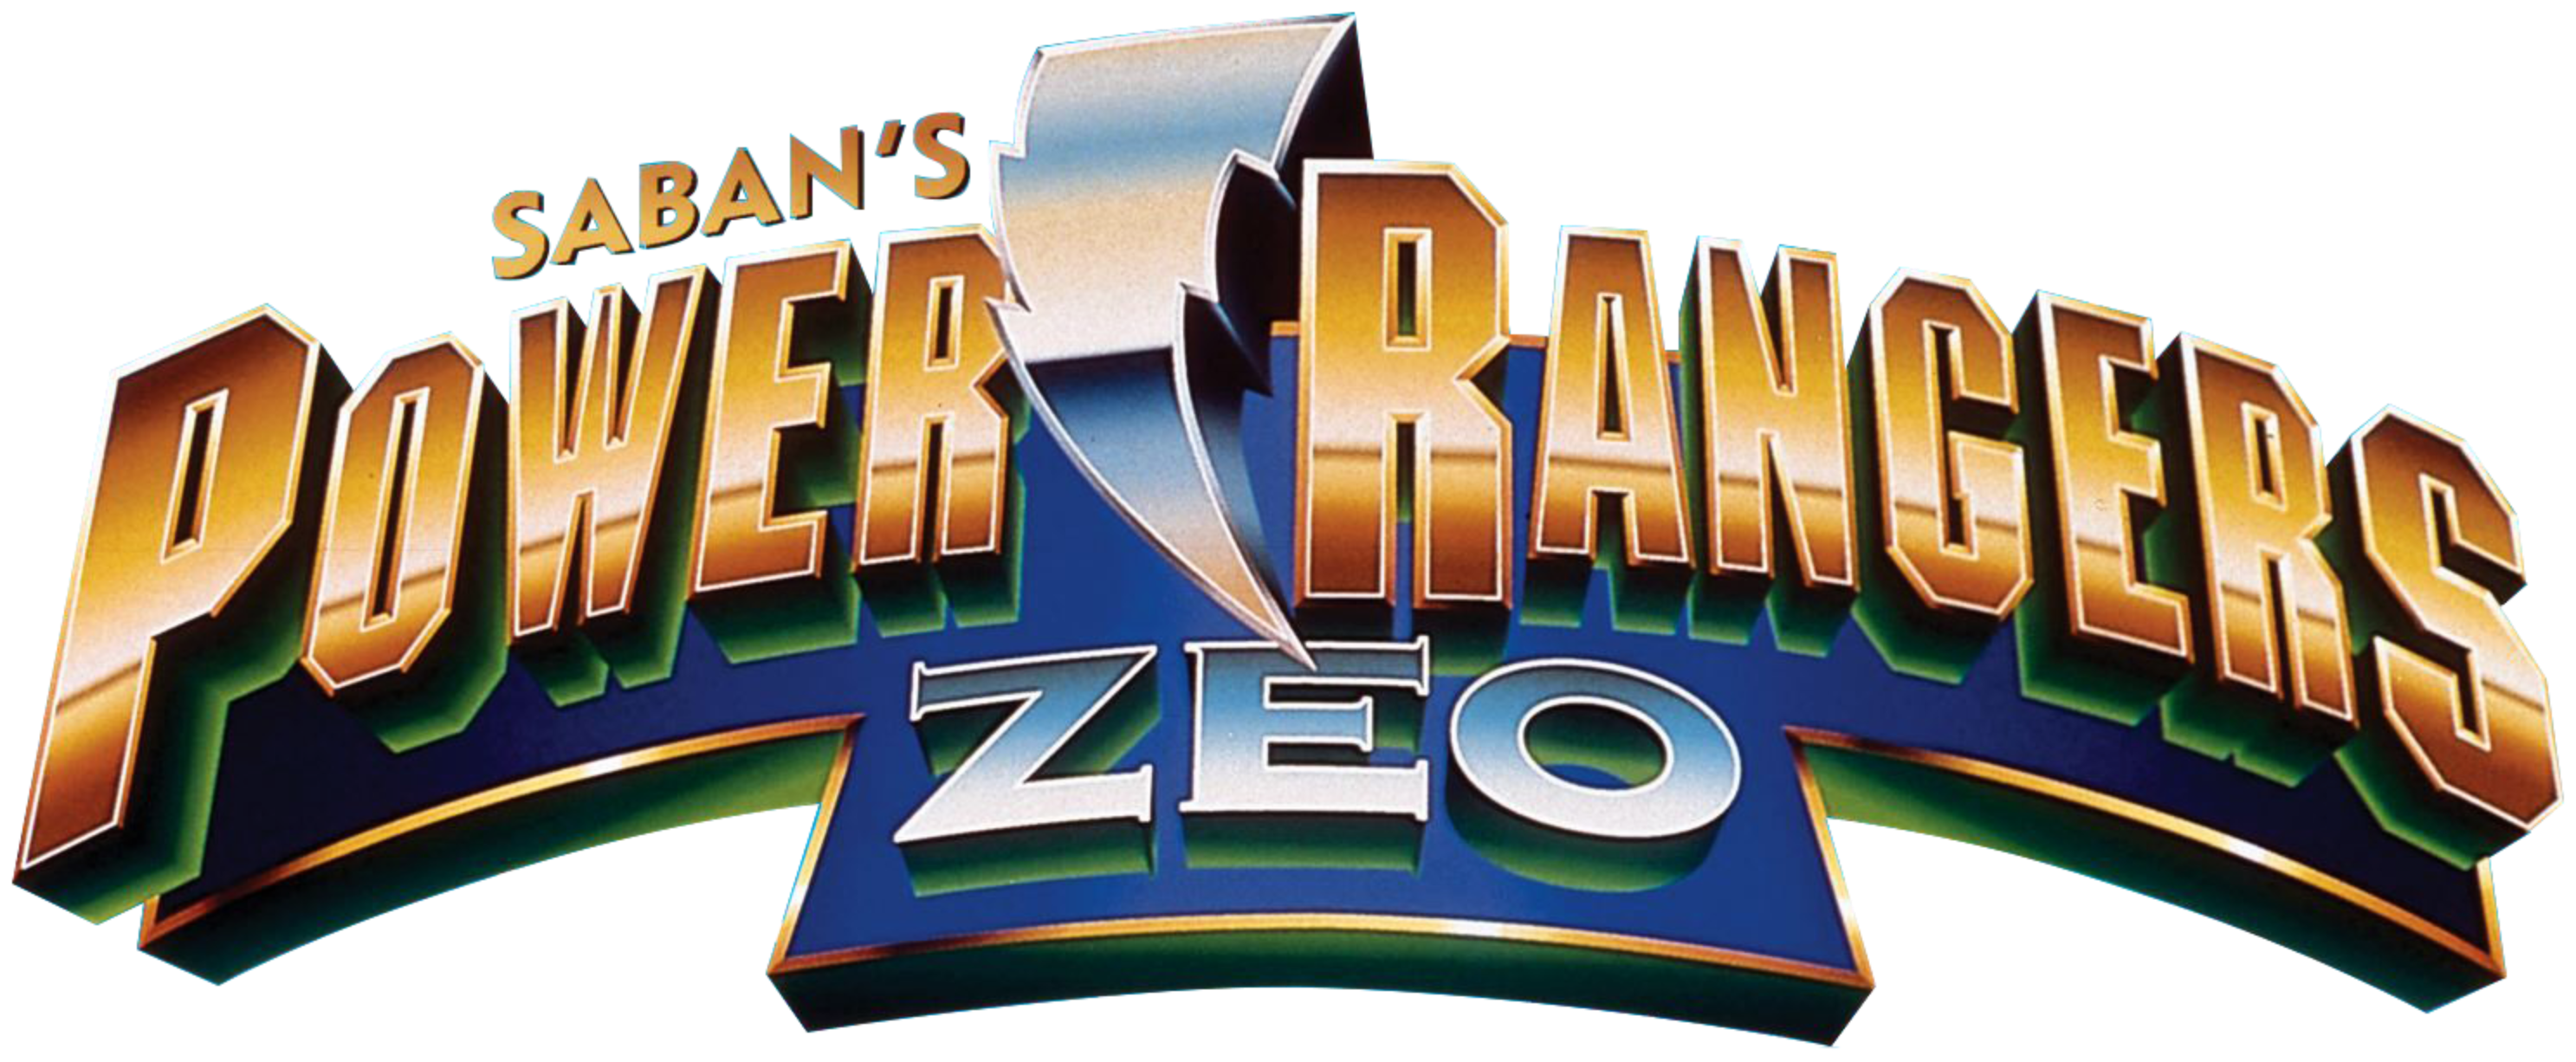 Power Rangers Zeo Complete (7 DVDs Box Set)